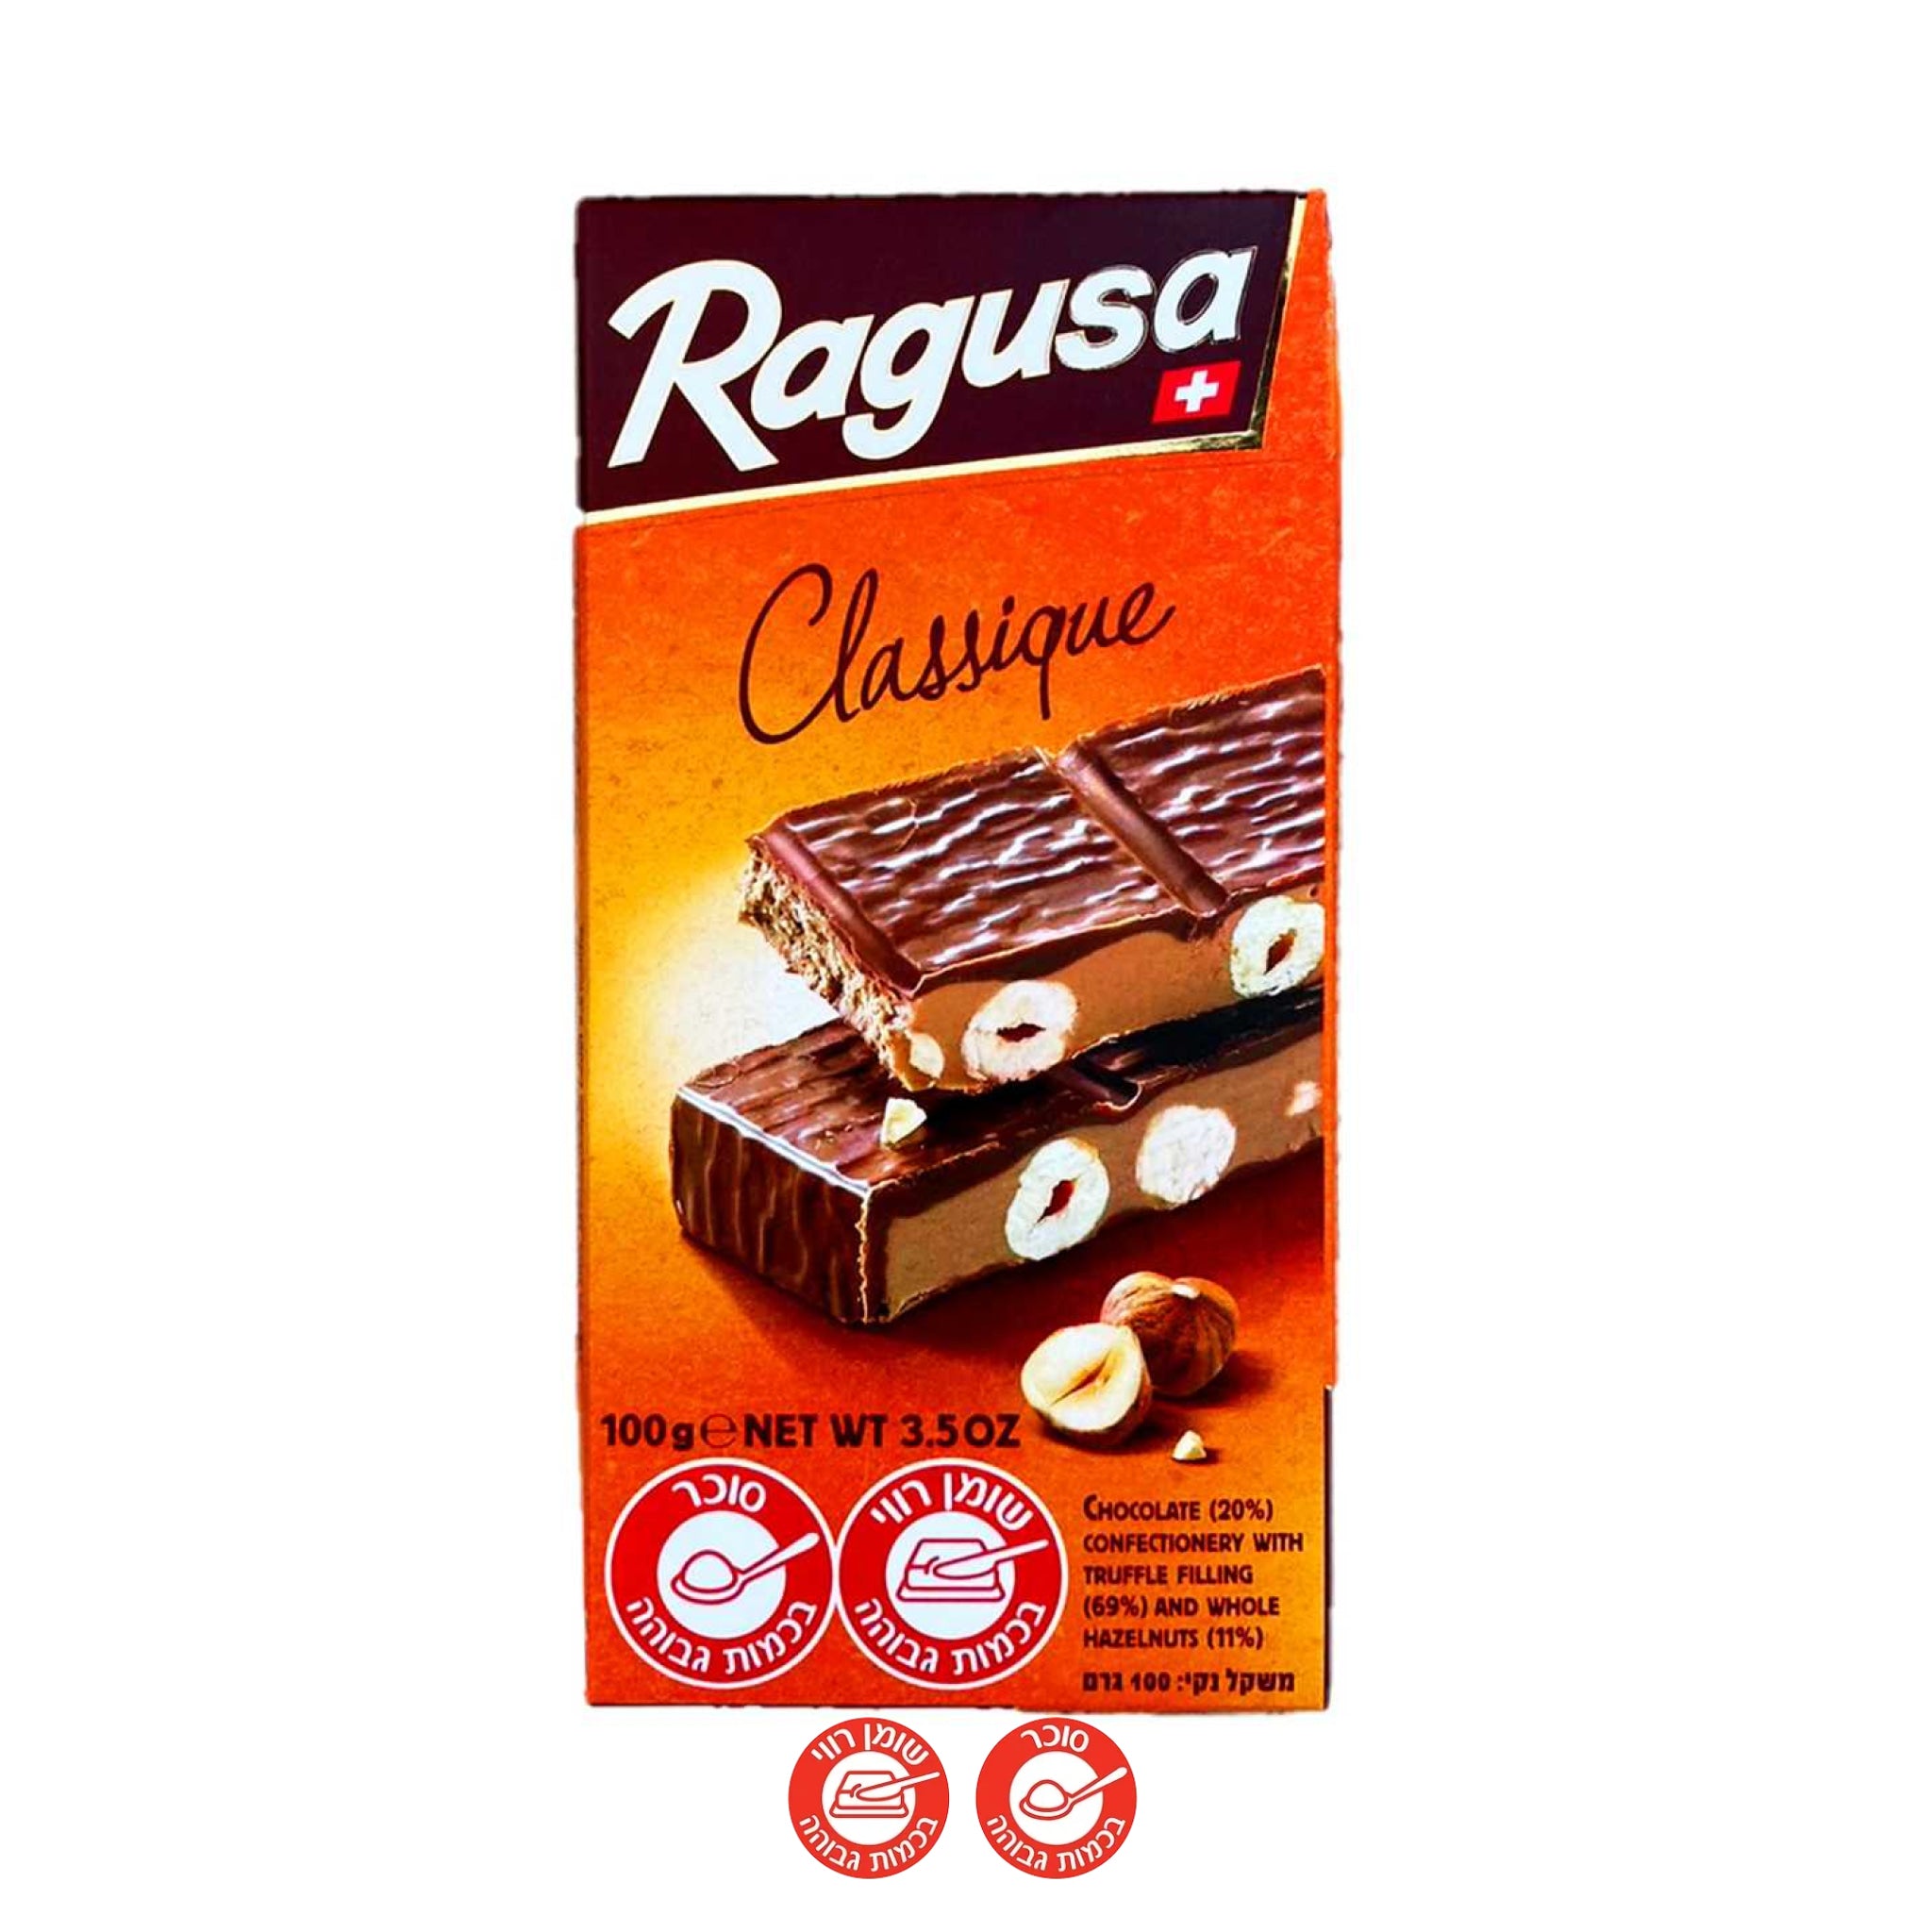 Ragusa Classic רגוסה שוקולד שוויצרי מעולה - טעימים